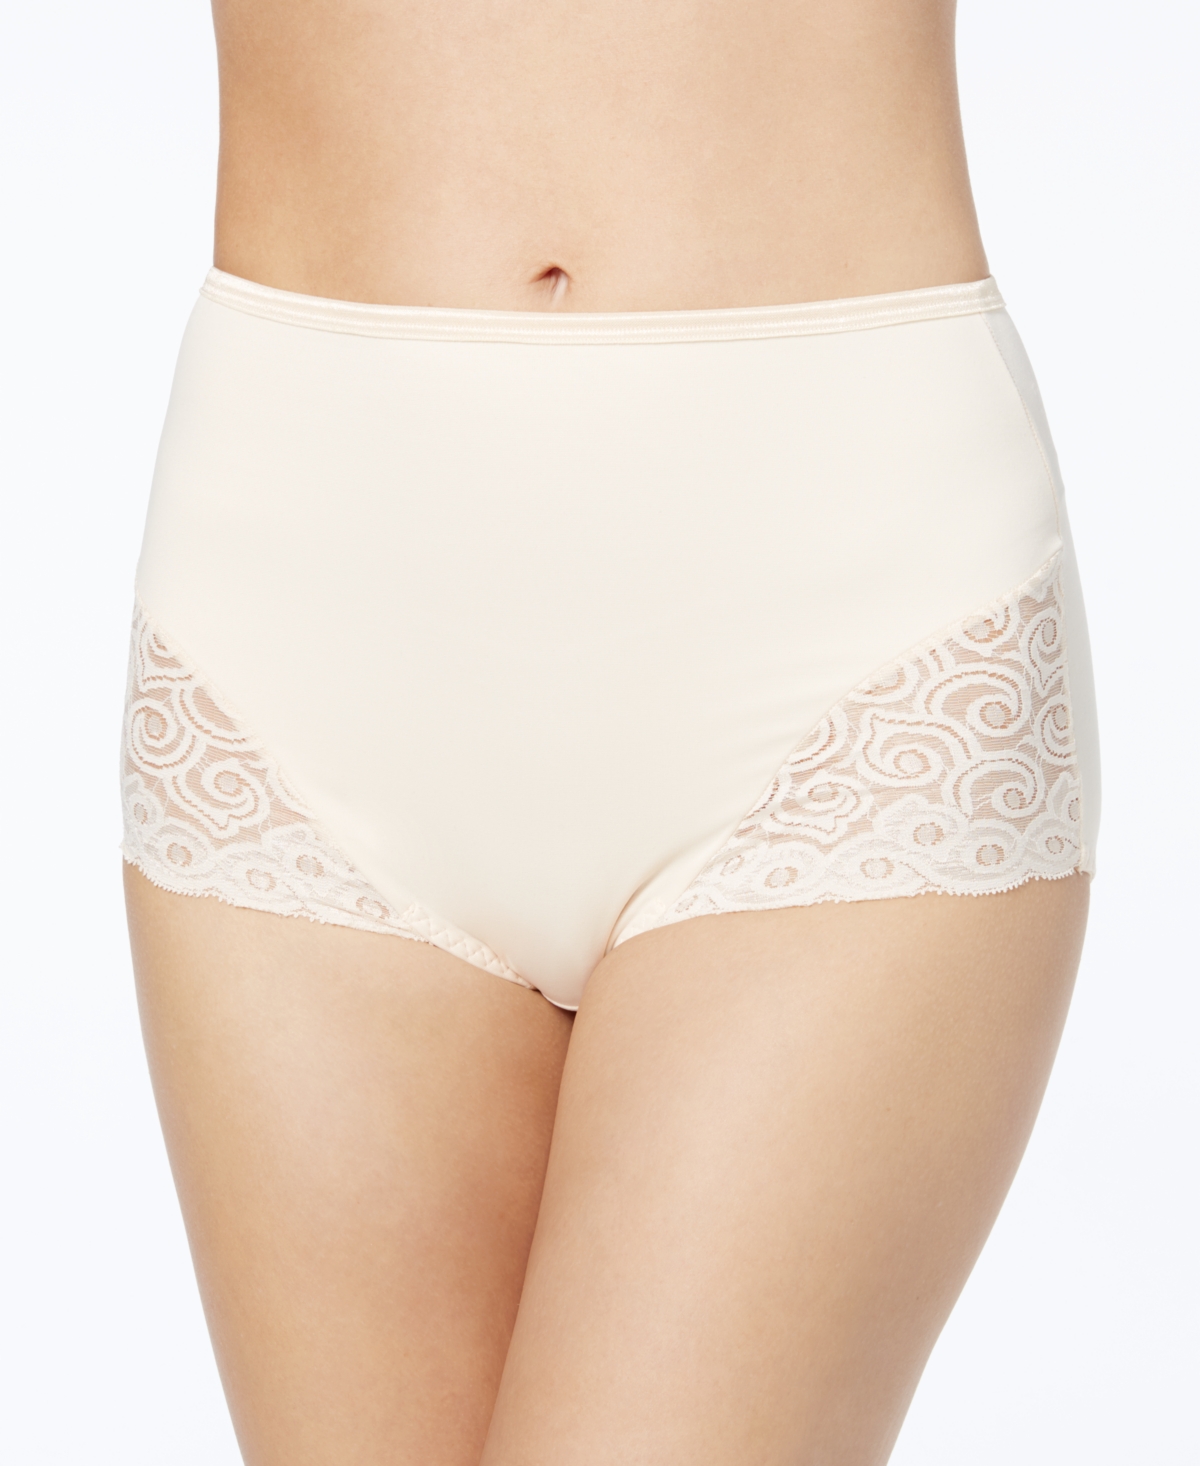 Women's Firm Tummy-Control Lace Trim Microfiber Brief Underwear 2 Pack X054 - Nude/Nude (Nude )